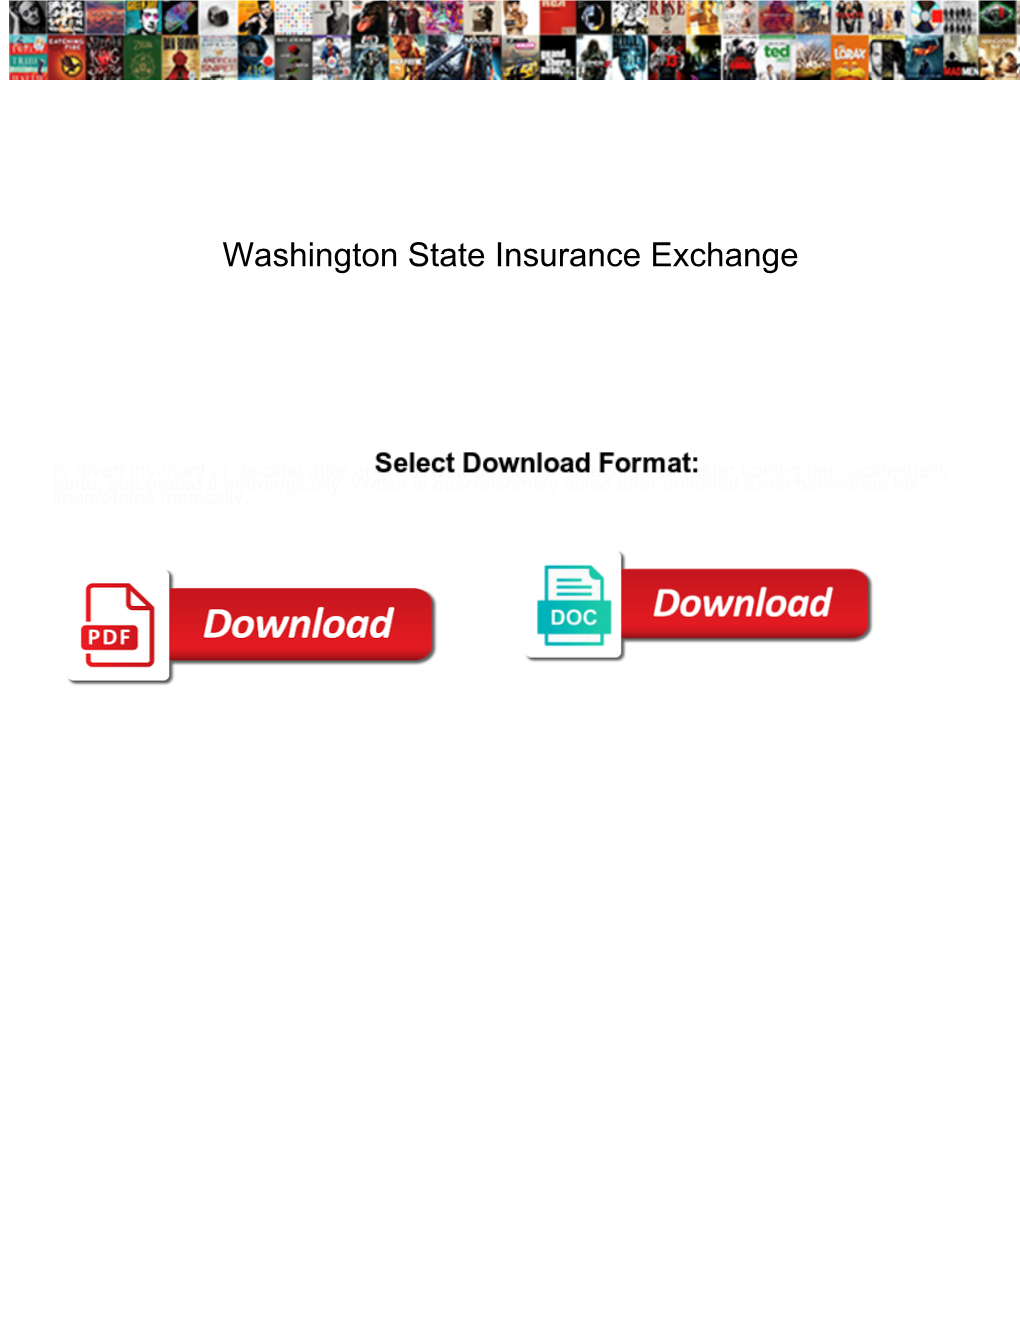 Washington State Insurance Exchange Enough